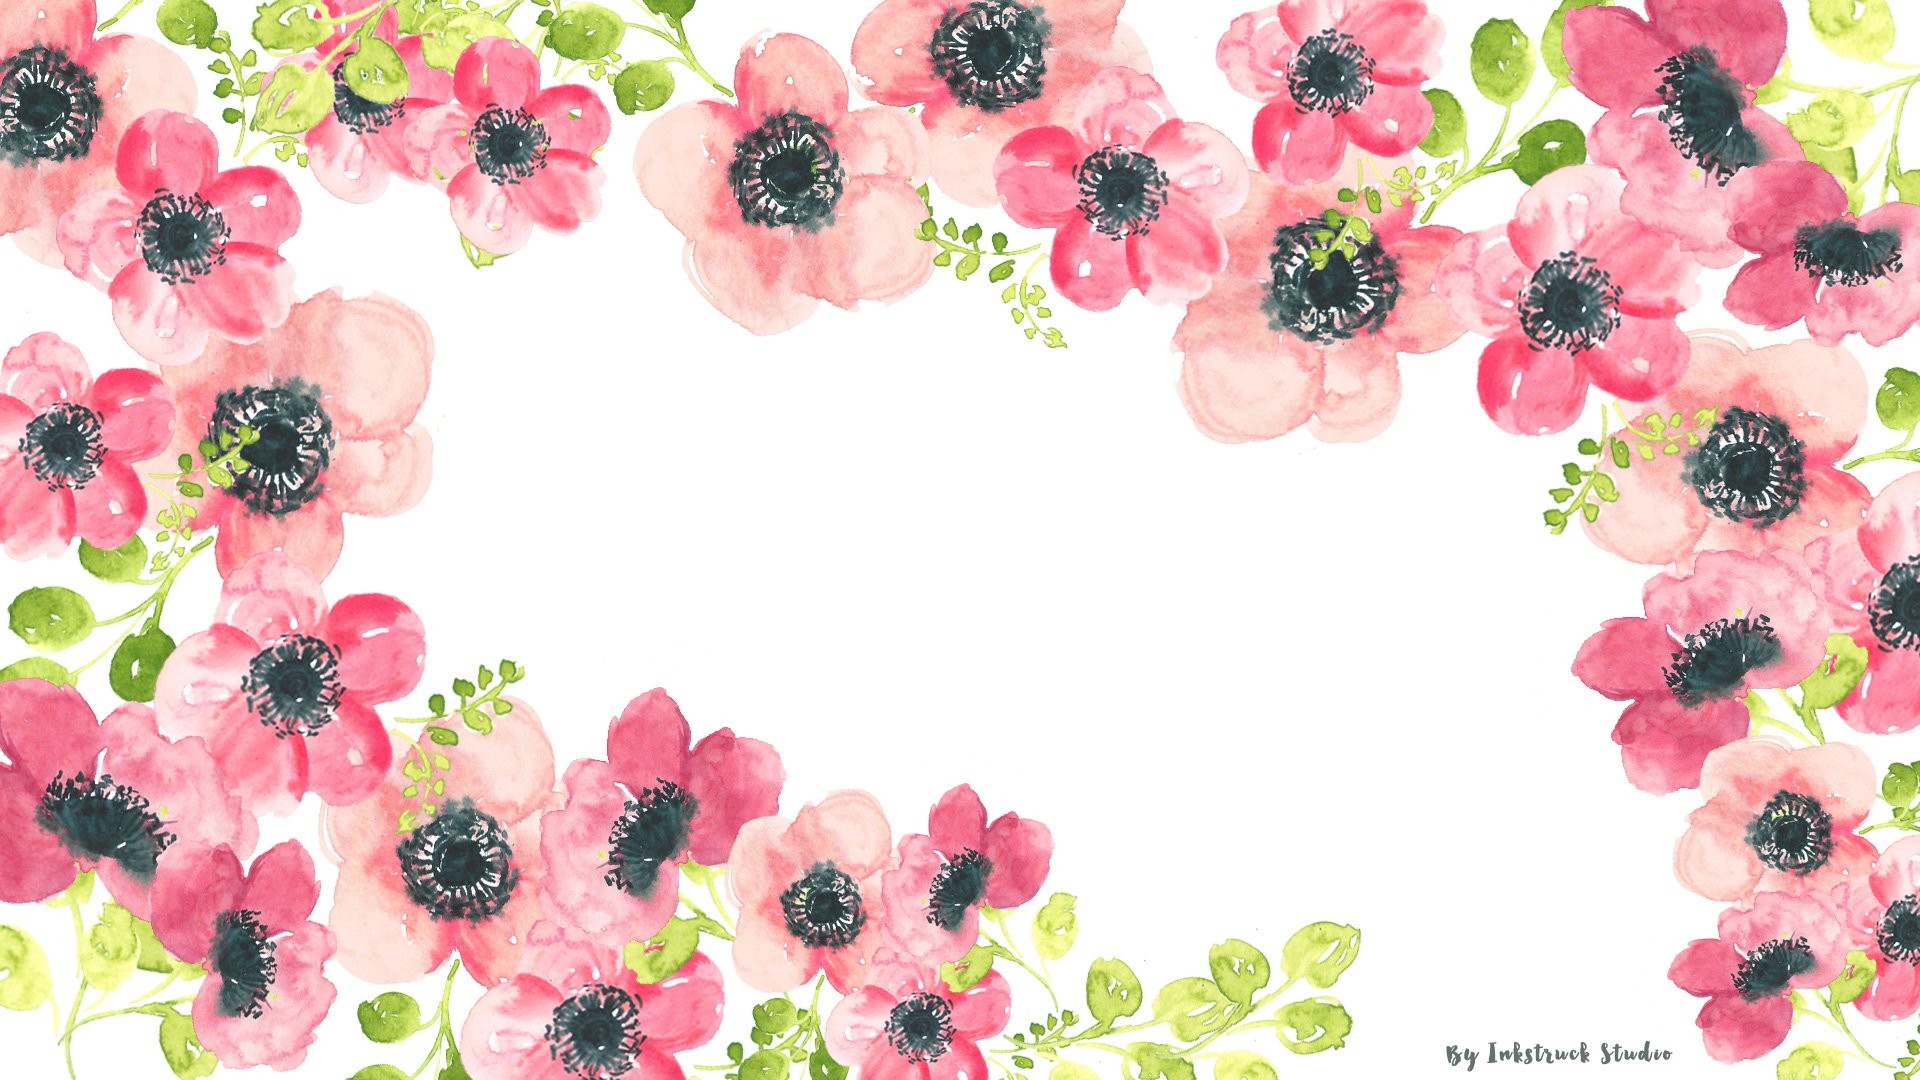 1920x1080 watercolor-floral-desktop-wallpaper.jpg 1,920Ã1,080 pixels | Wallpapers |  Pinterest | Wallpaper, Laptop backgrounds and Wallpaper desktop